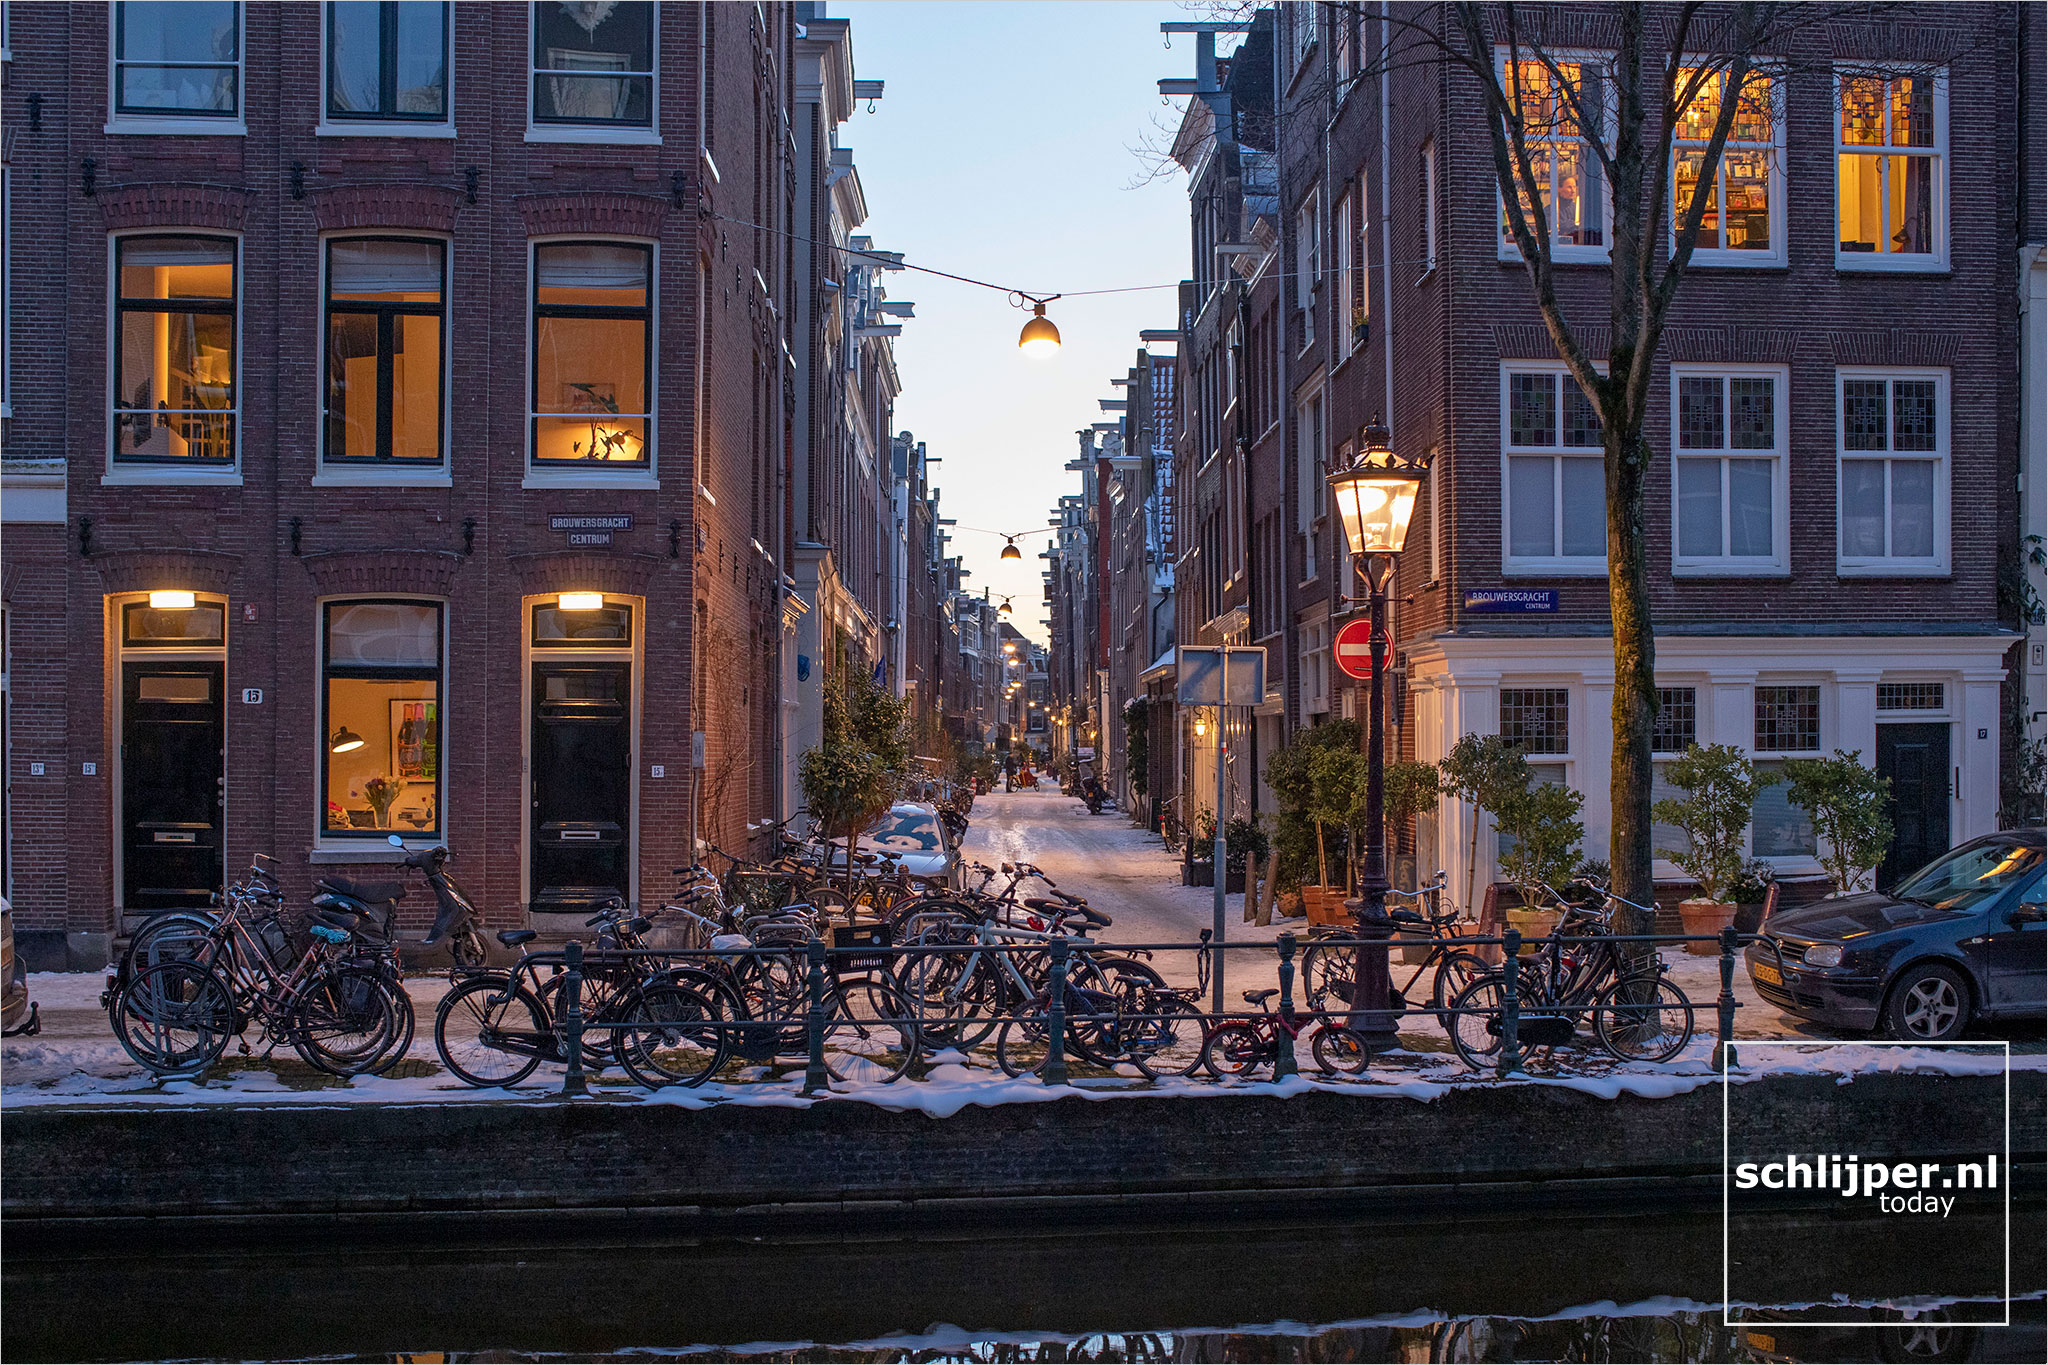 The Netherlands, Amsterdam, 11 februari 2021